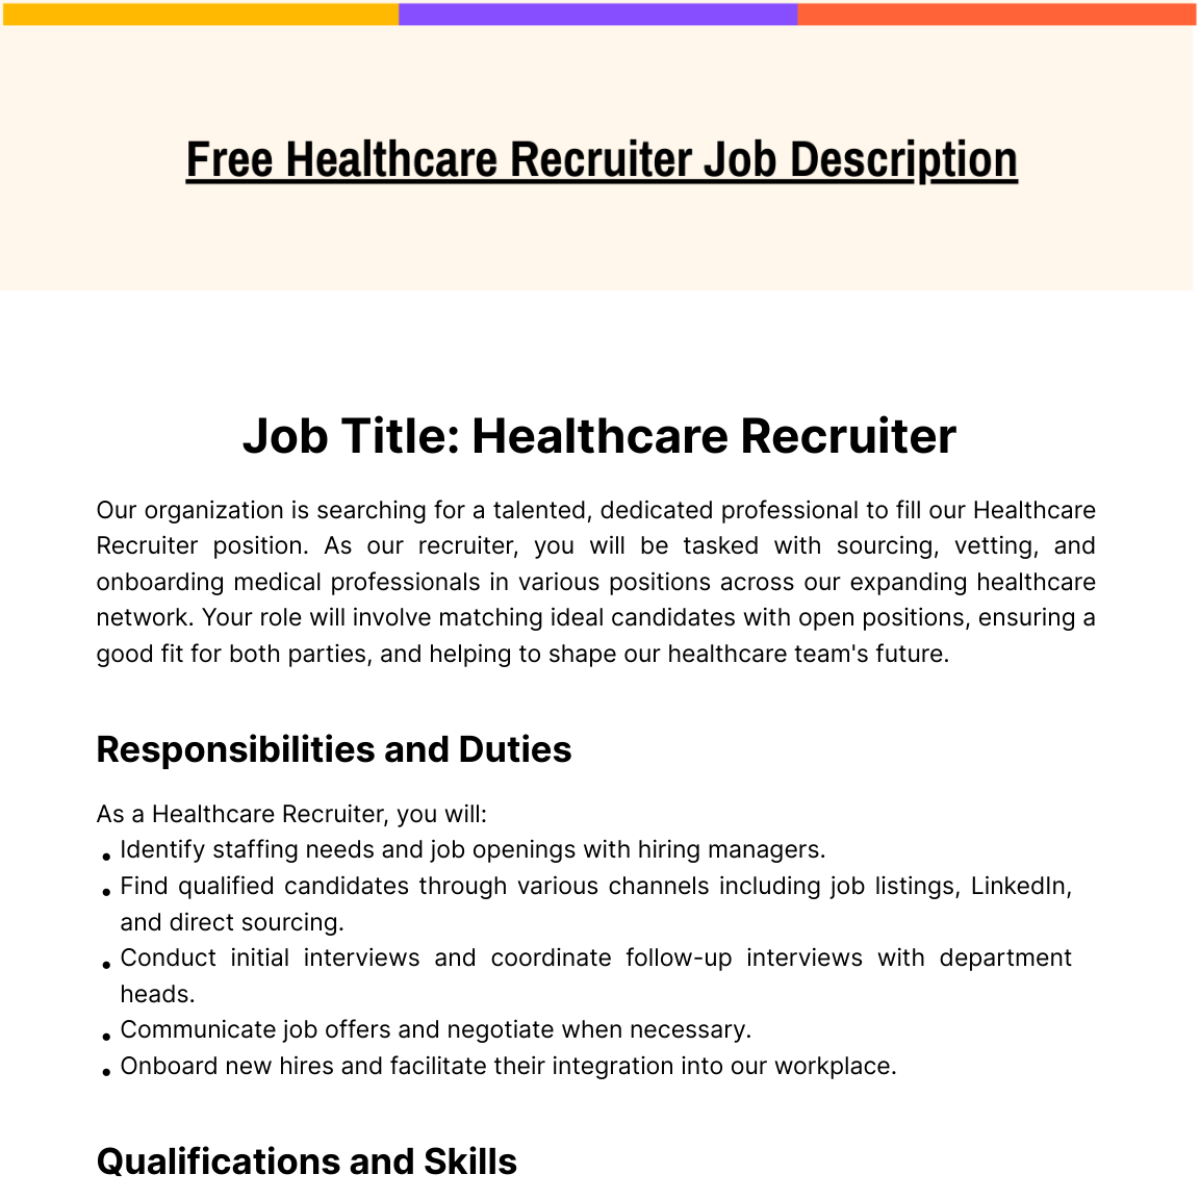 Free Healthcare Recruiter Job Description Template